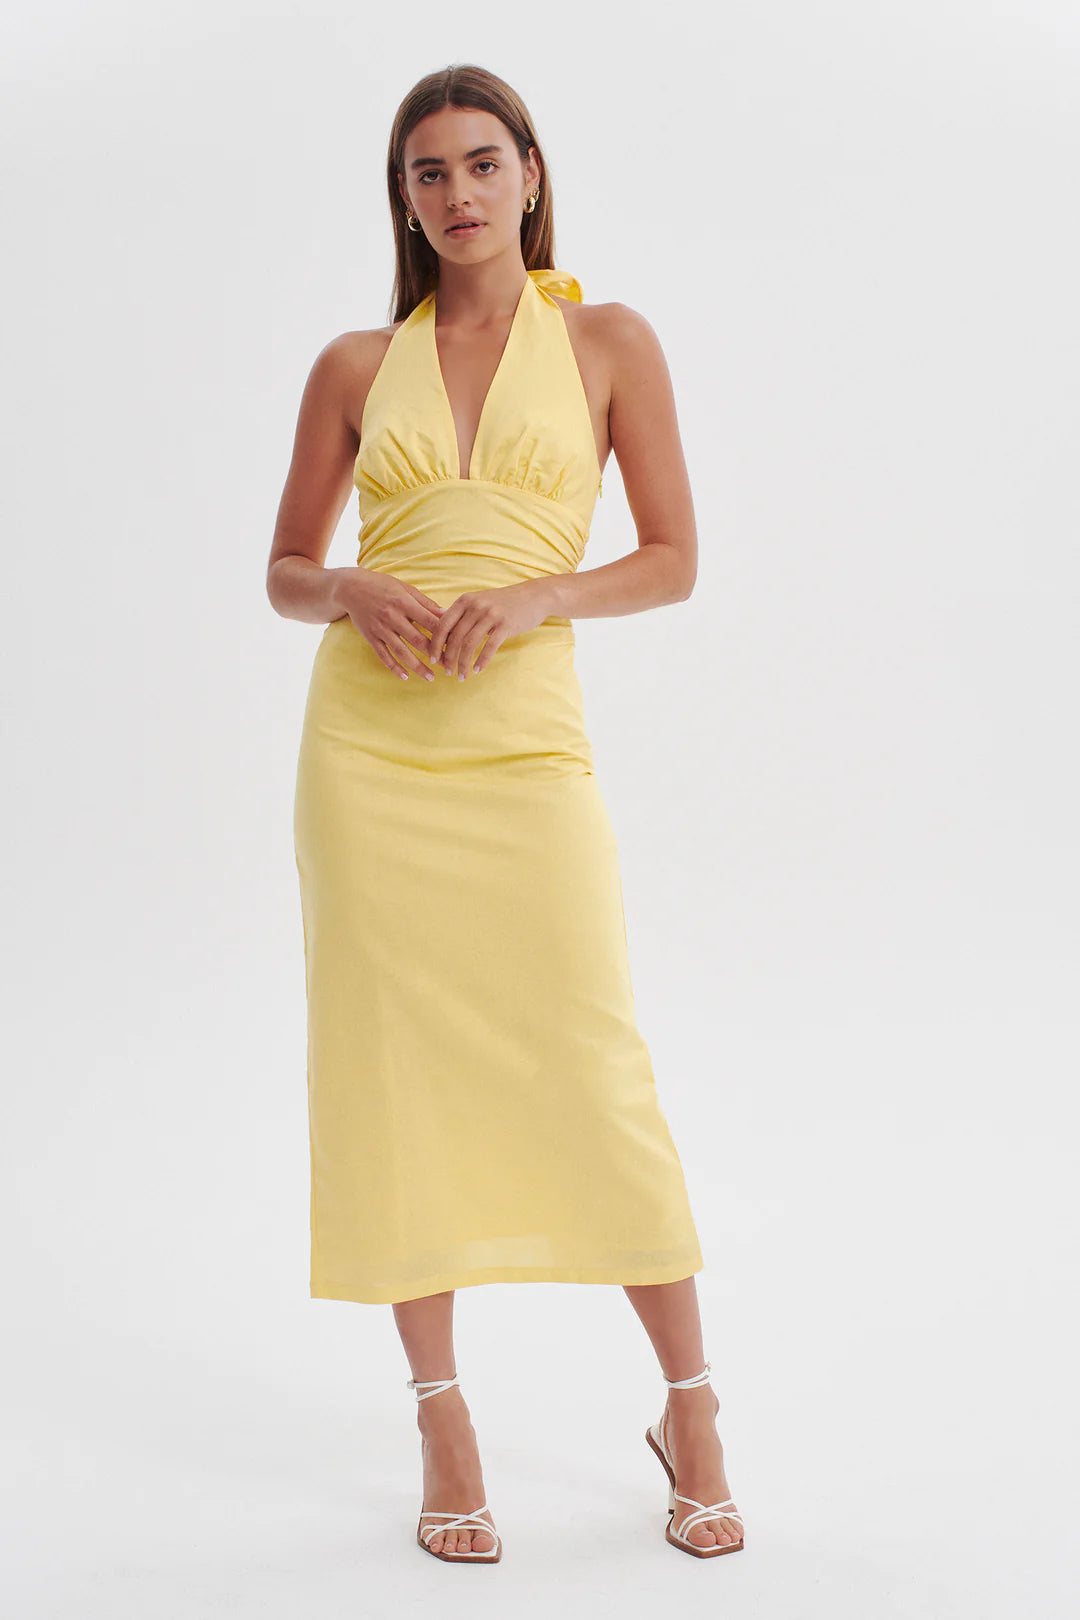 Ownley Kara Dress Yellow Sz 8